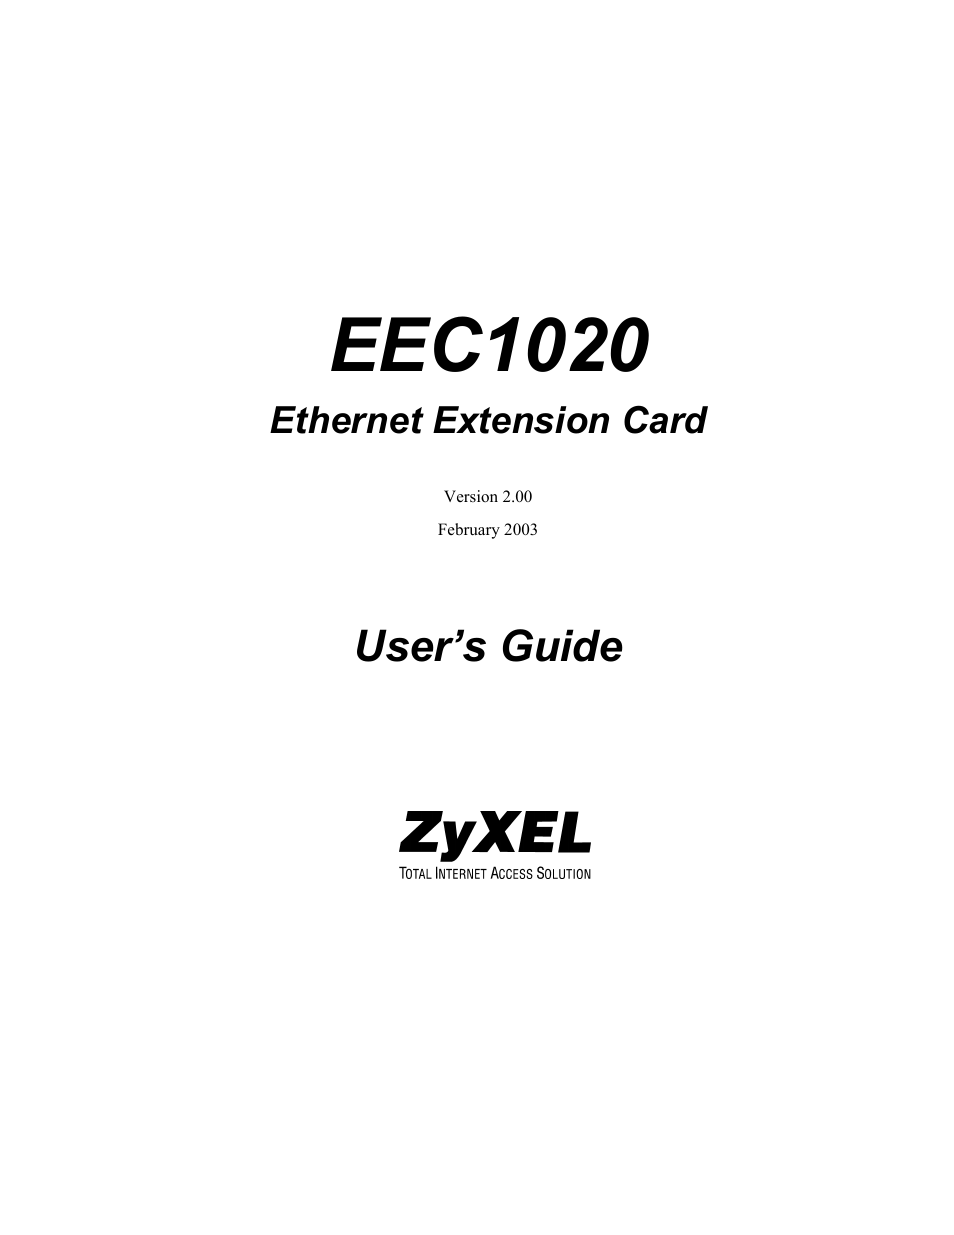 Ethernet Extension Card EEC1020